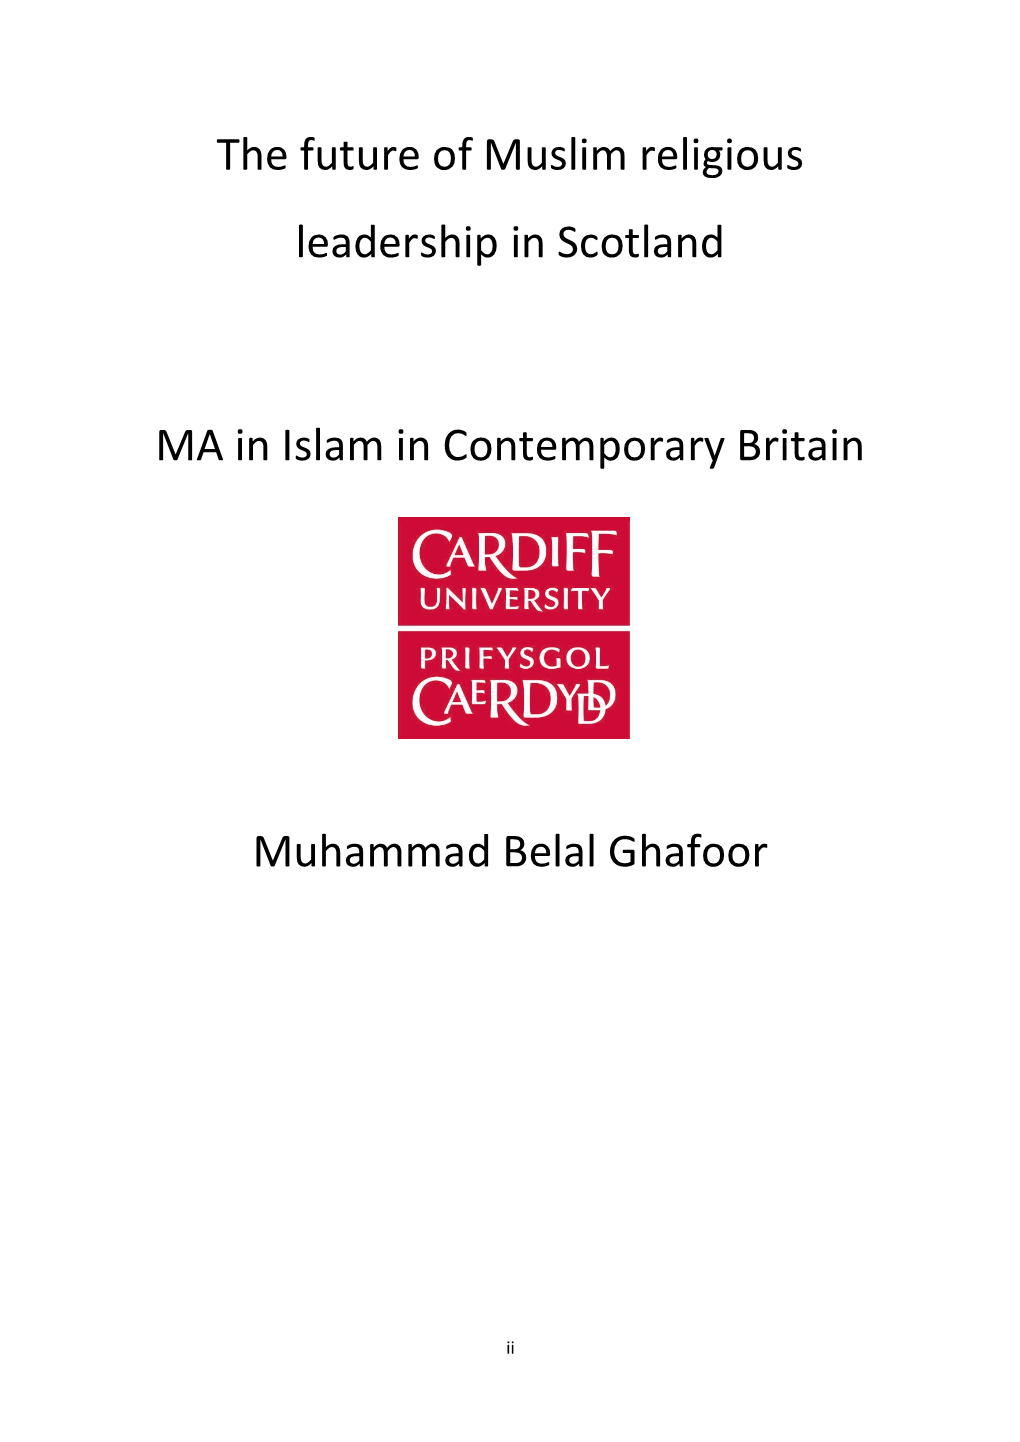 The Future of Muslim Religious Leadership in Scotland MA in Islam